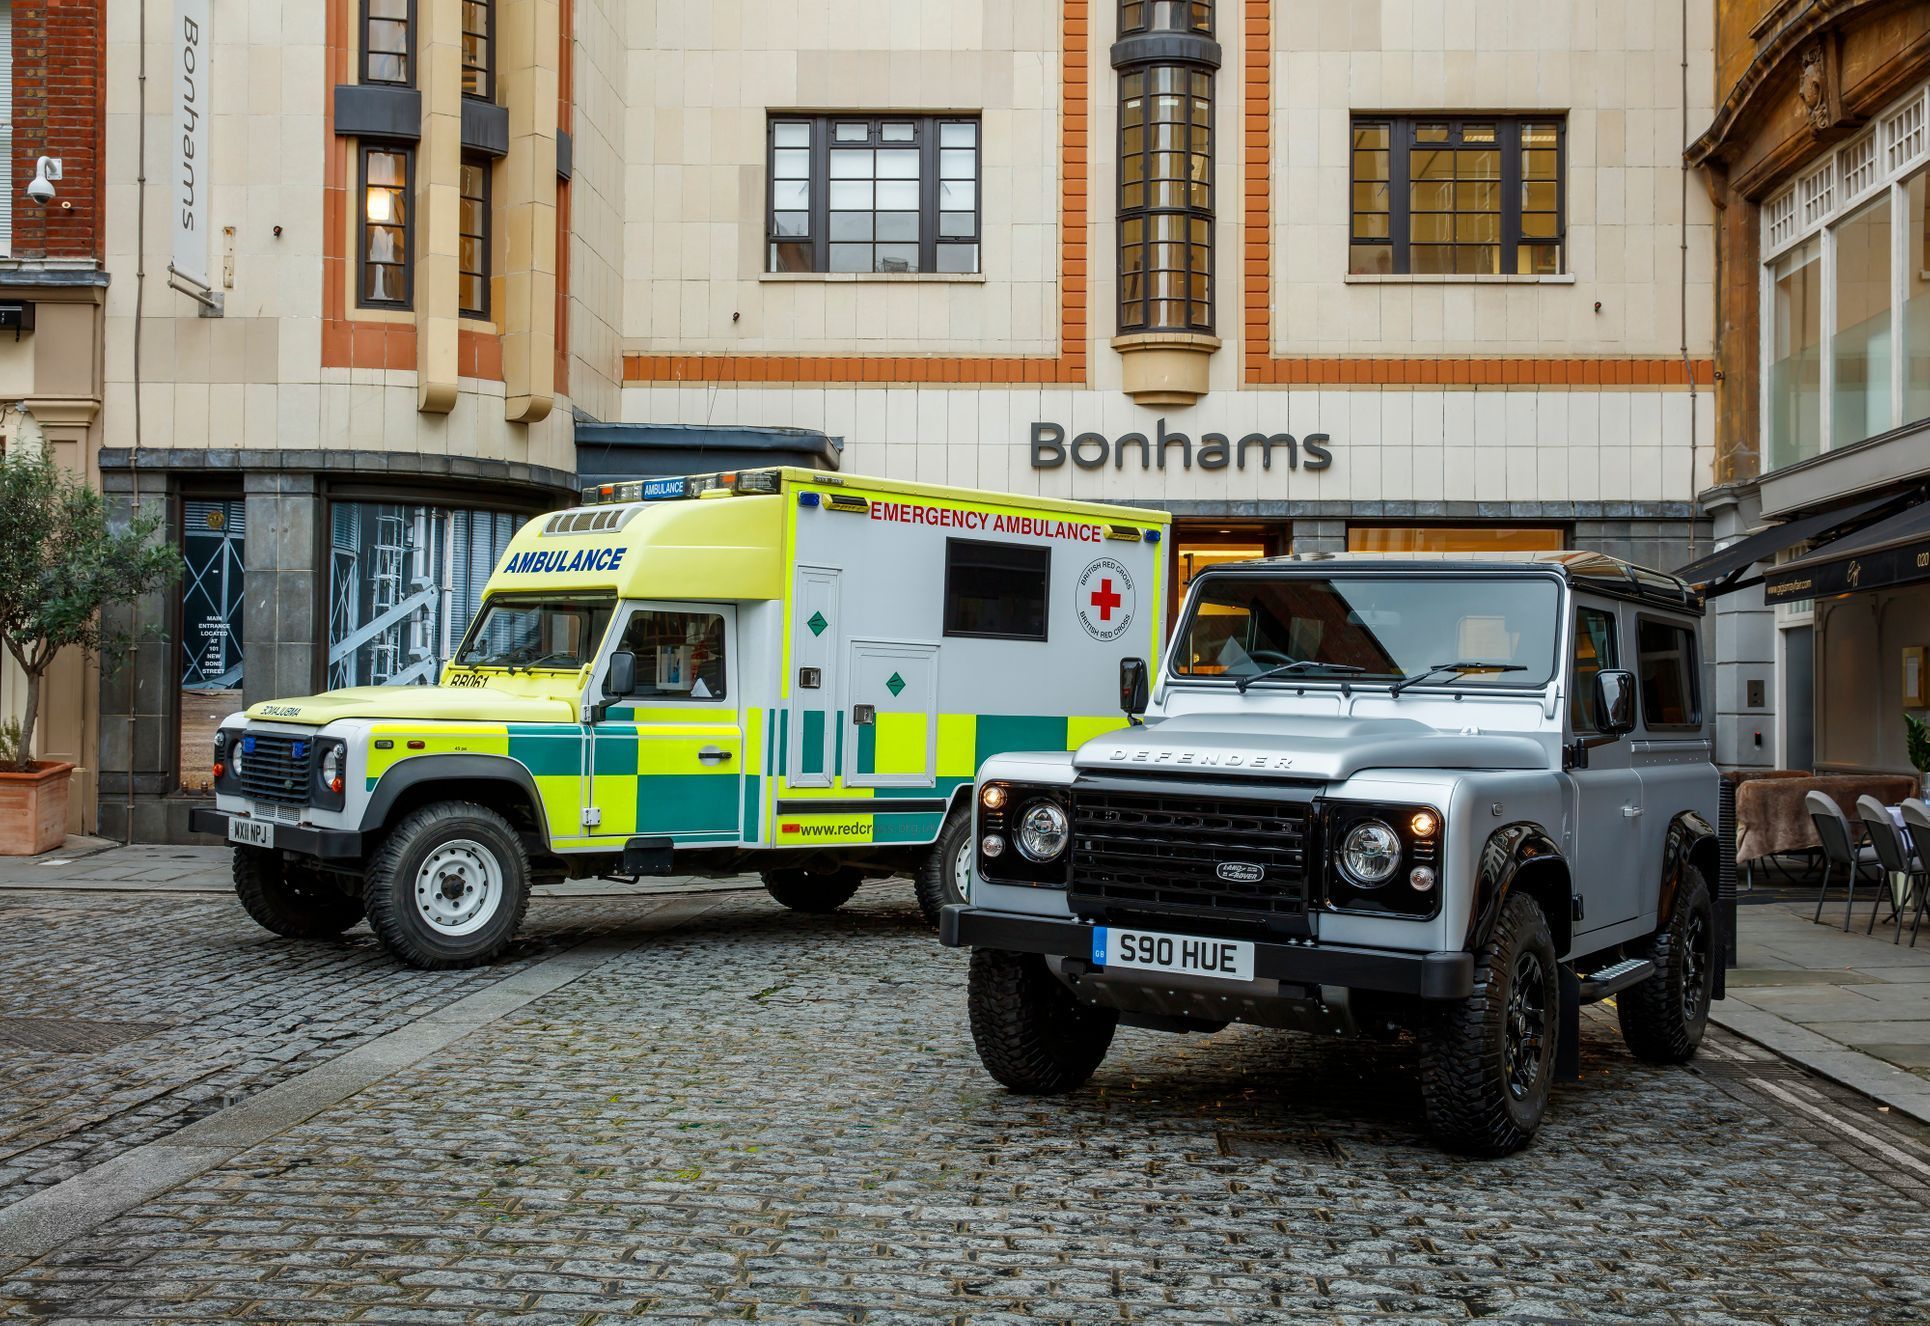 Land Rover Defender - 29 s ambulanci Red Cross LR_Def_Bonhams_301115_06